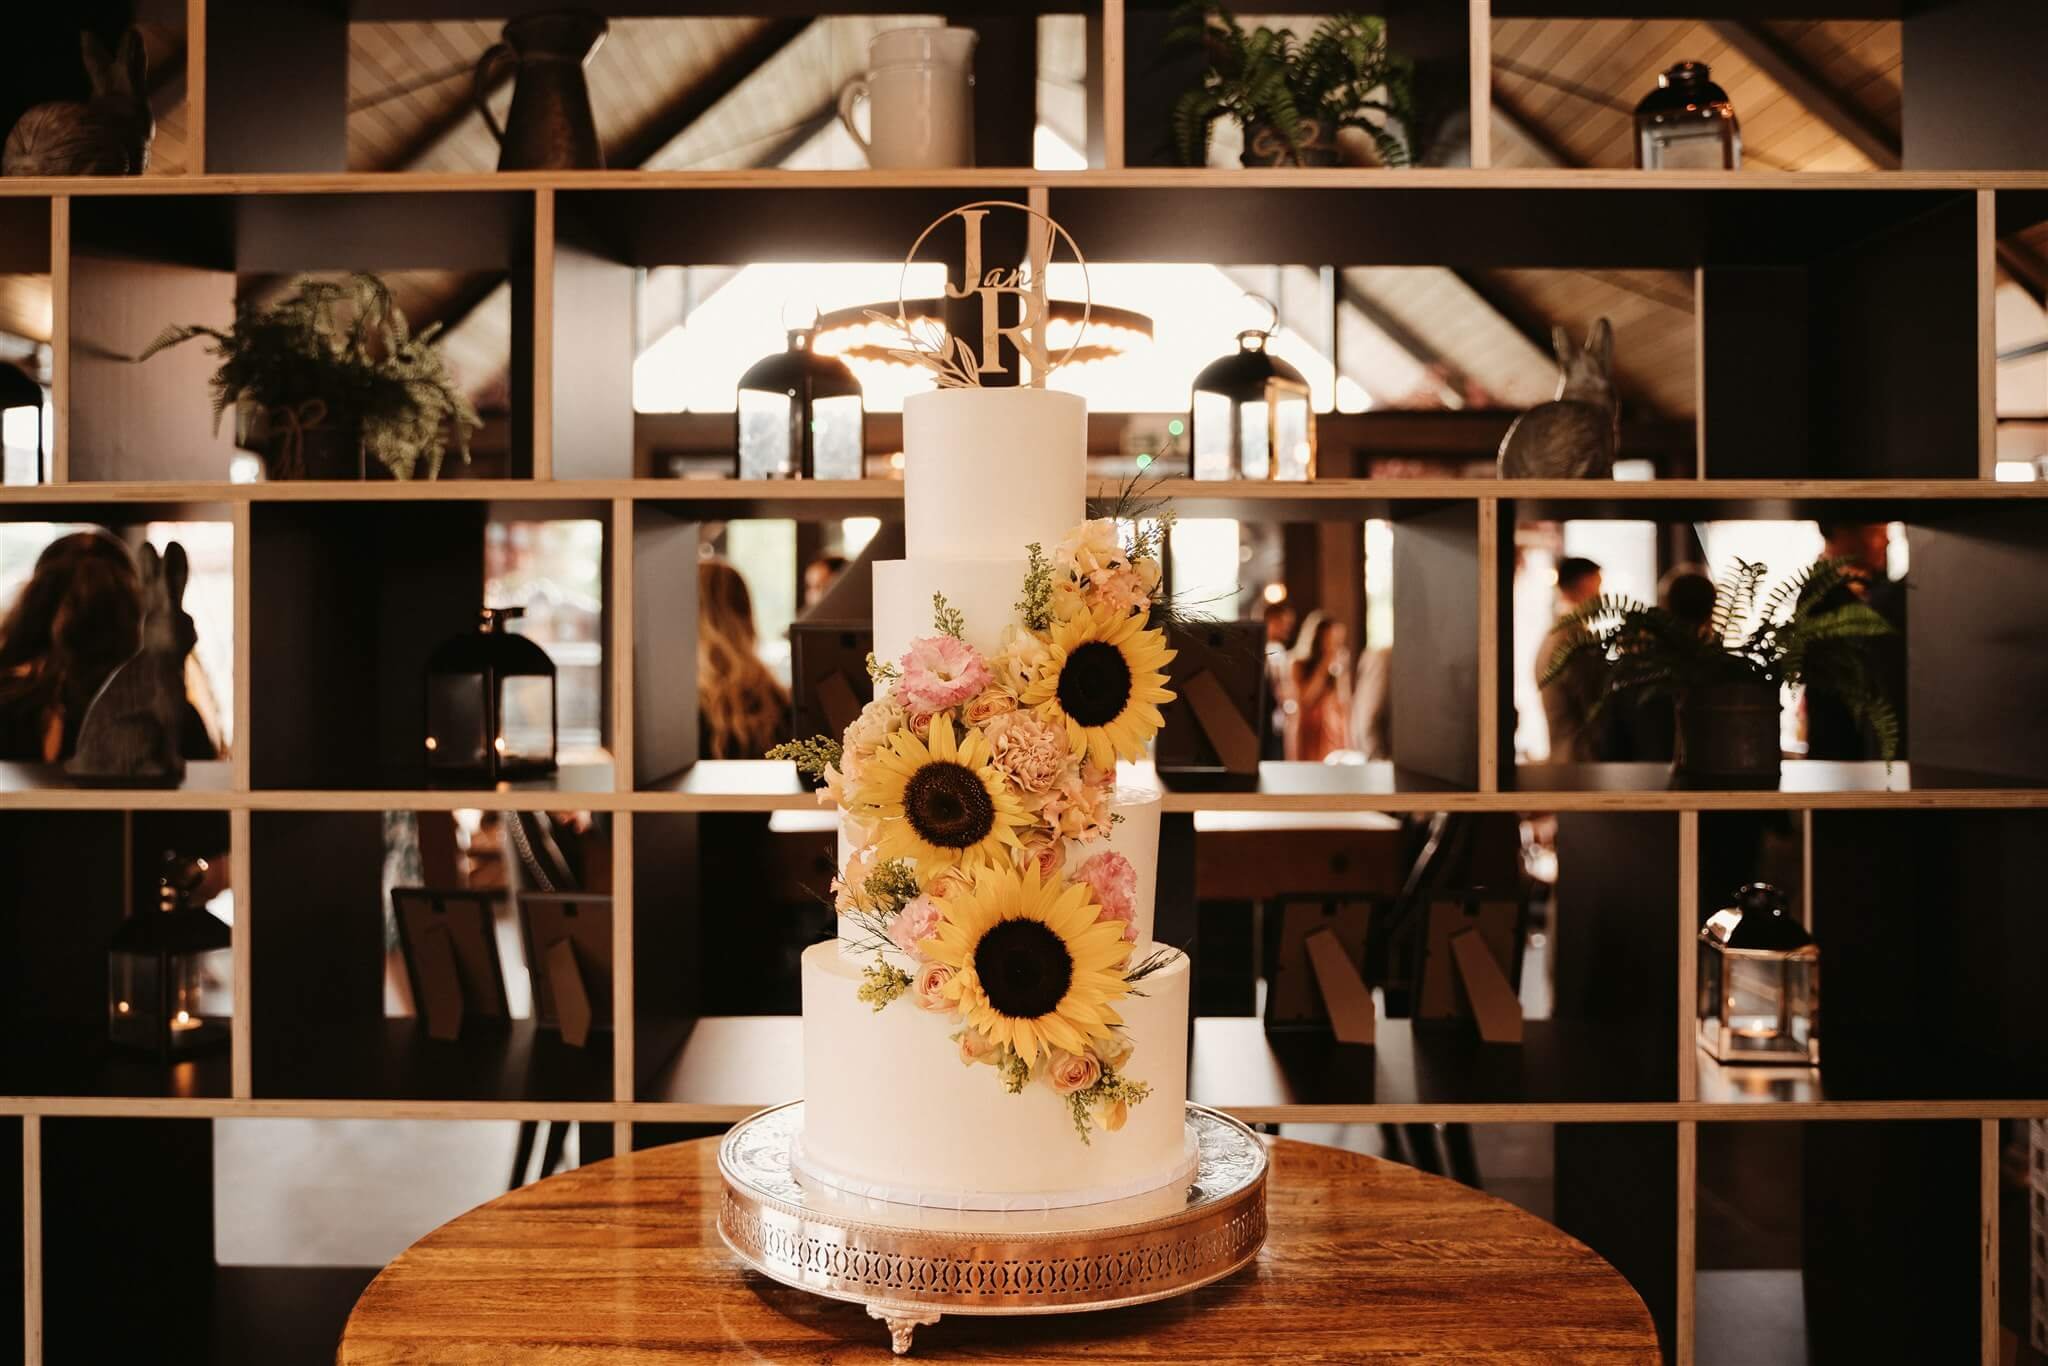 Wedding-cake-with-sunflowers-2.jpg